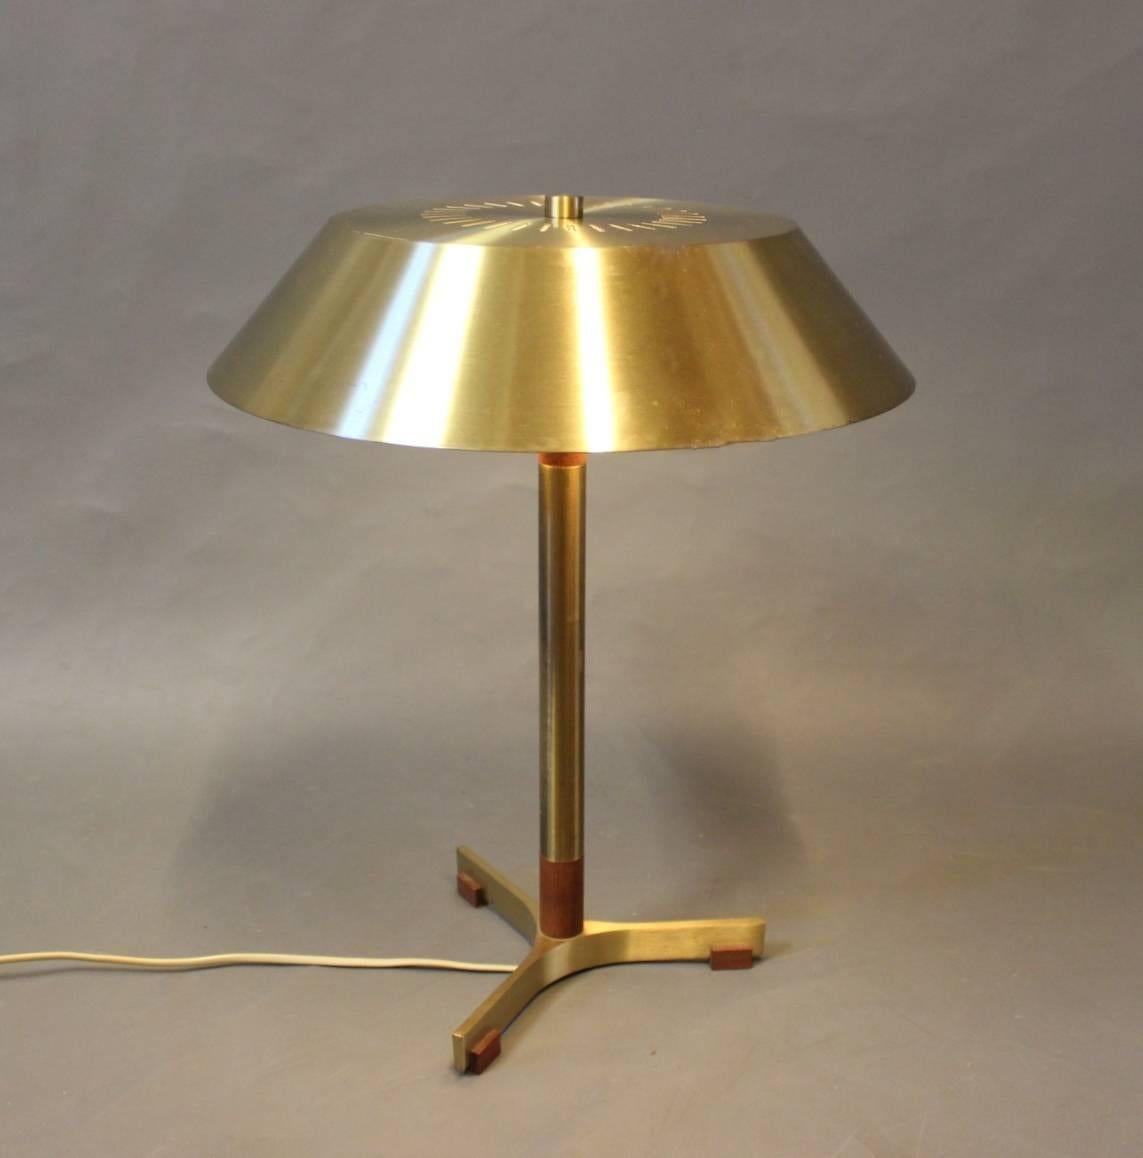 Tablelamp, model President, in brass and teak designed by Fog and Mørup in the 1960s.